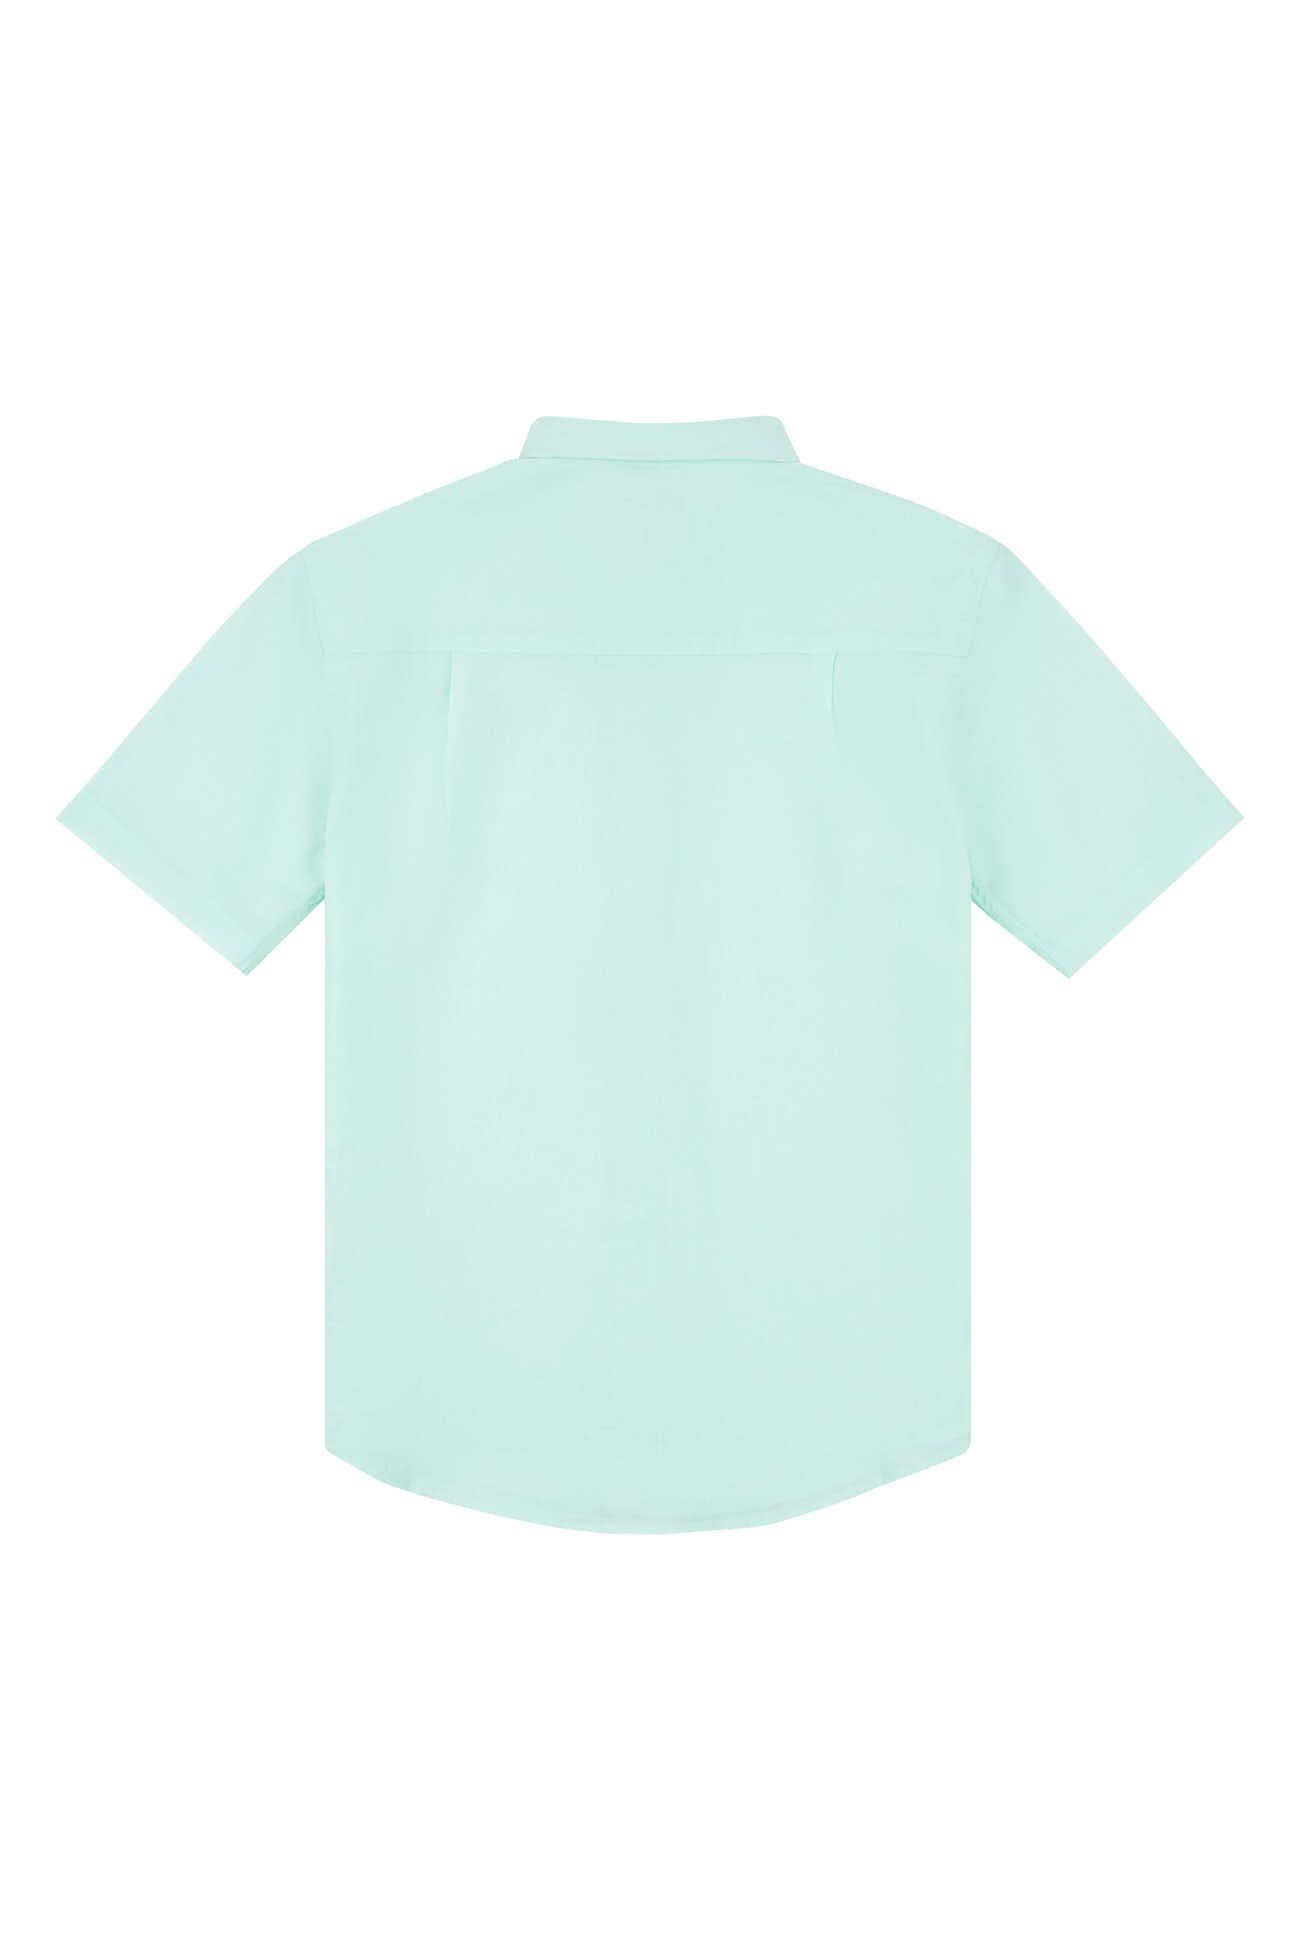 Boys Linen Blend Short Sleeve Shirt in Honey Dew